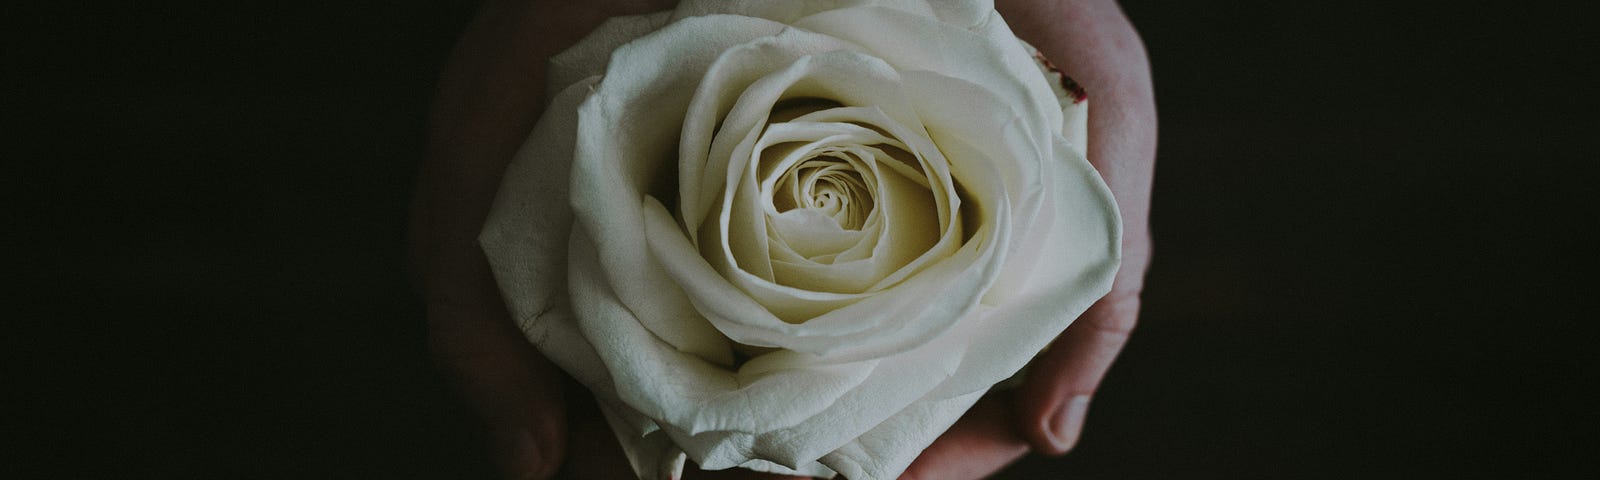 hands cradling a white rose, on a black background